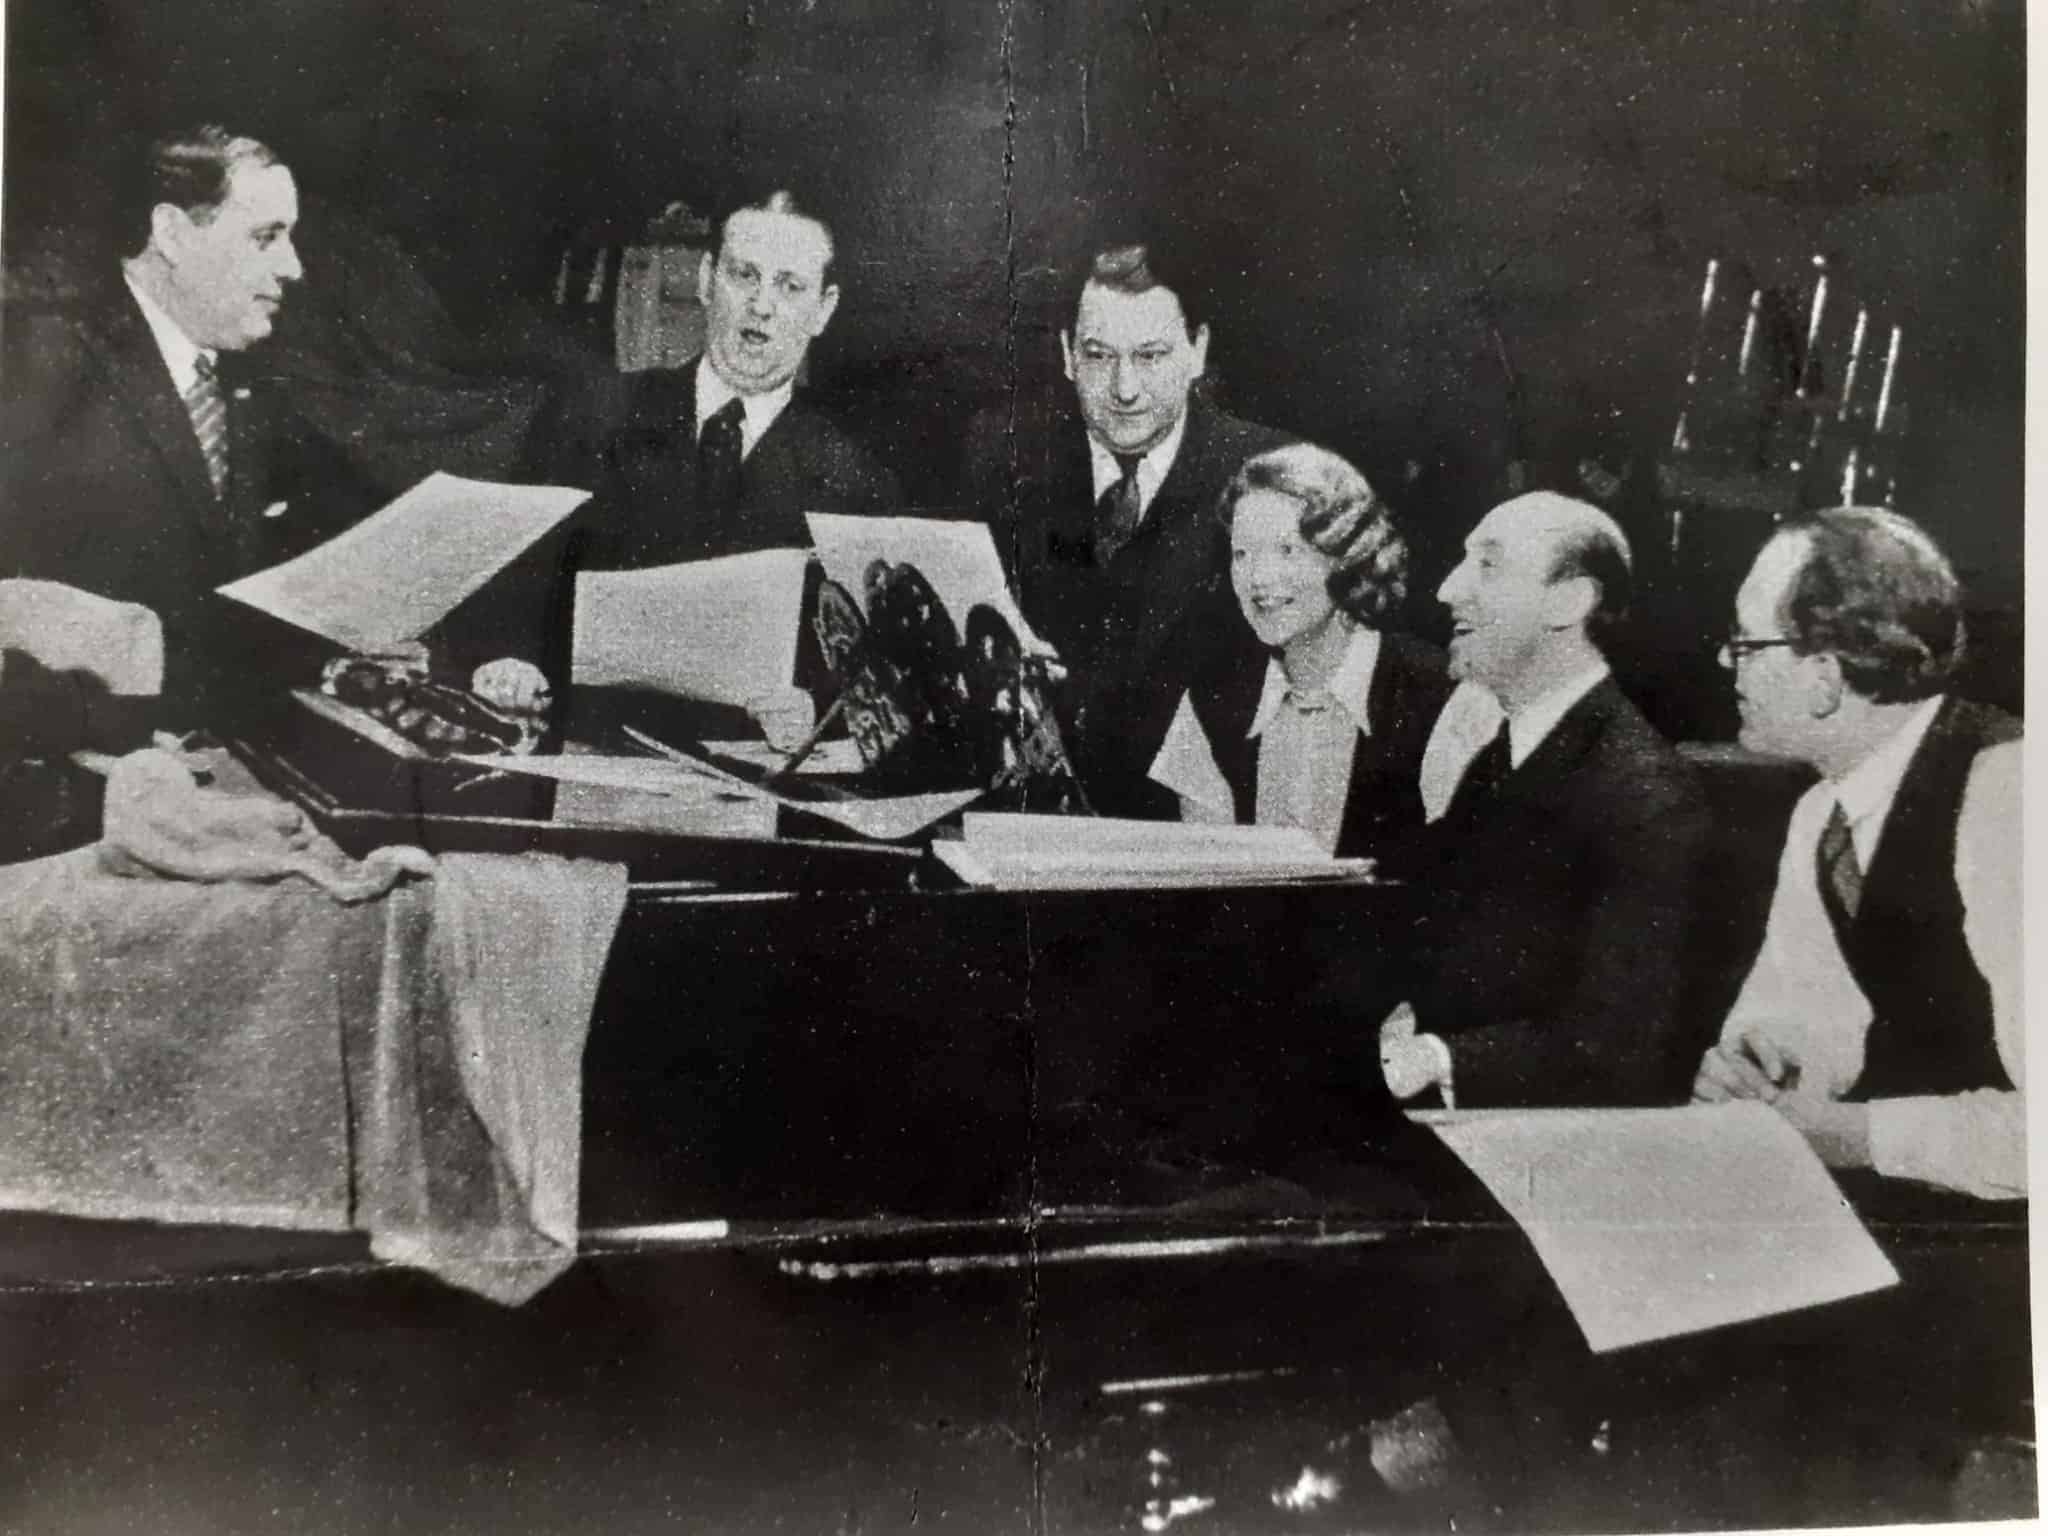 Spoliansky rehearsing Es liegt der Luft in Berlin in 1932